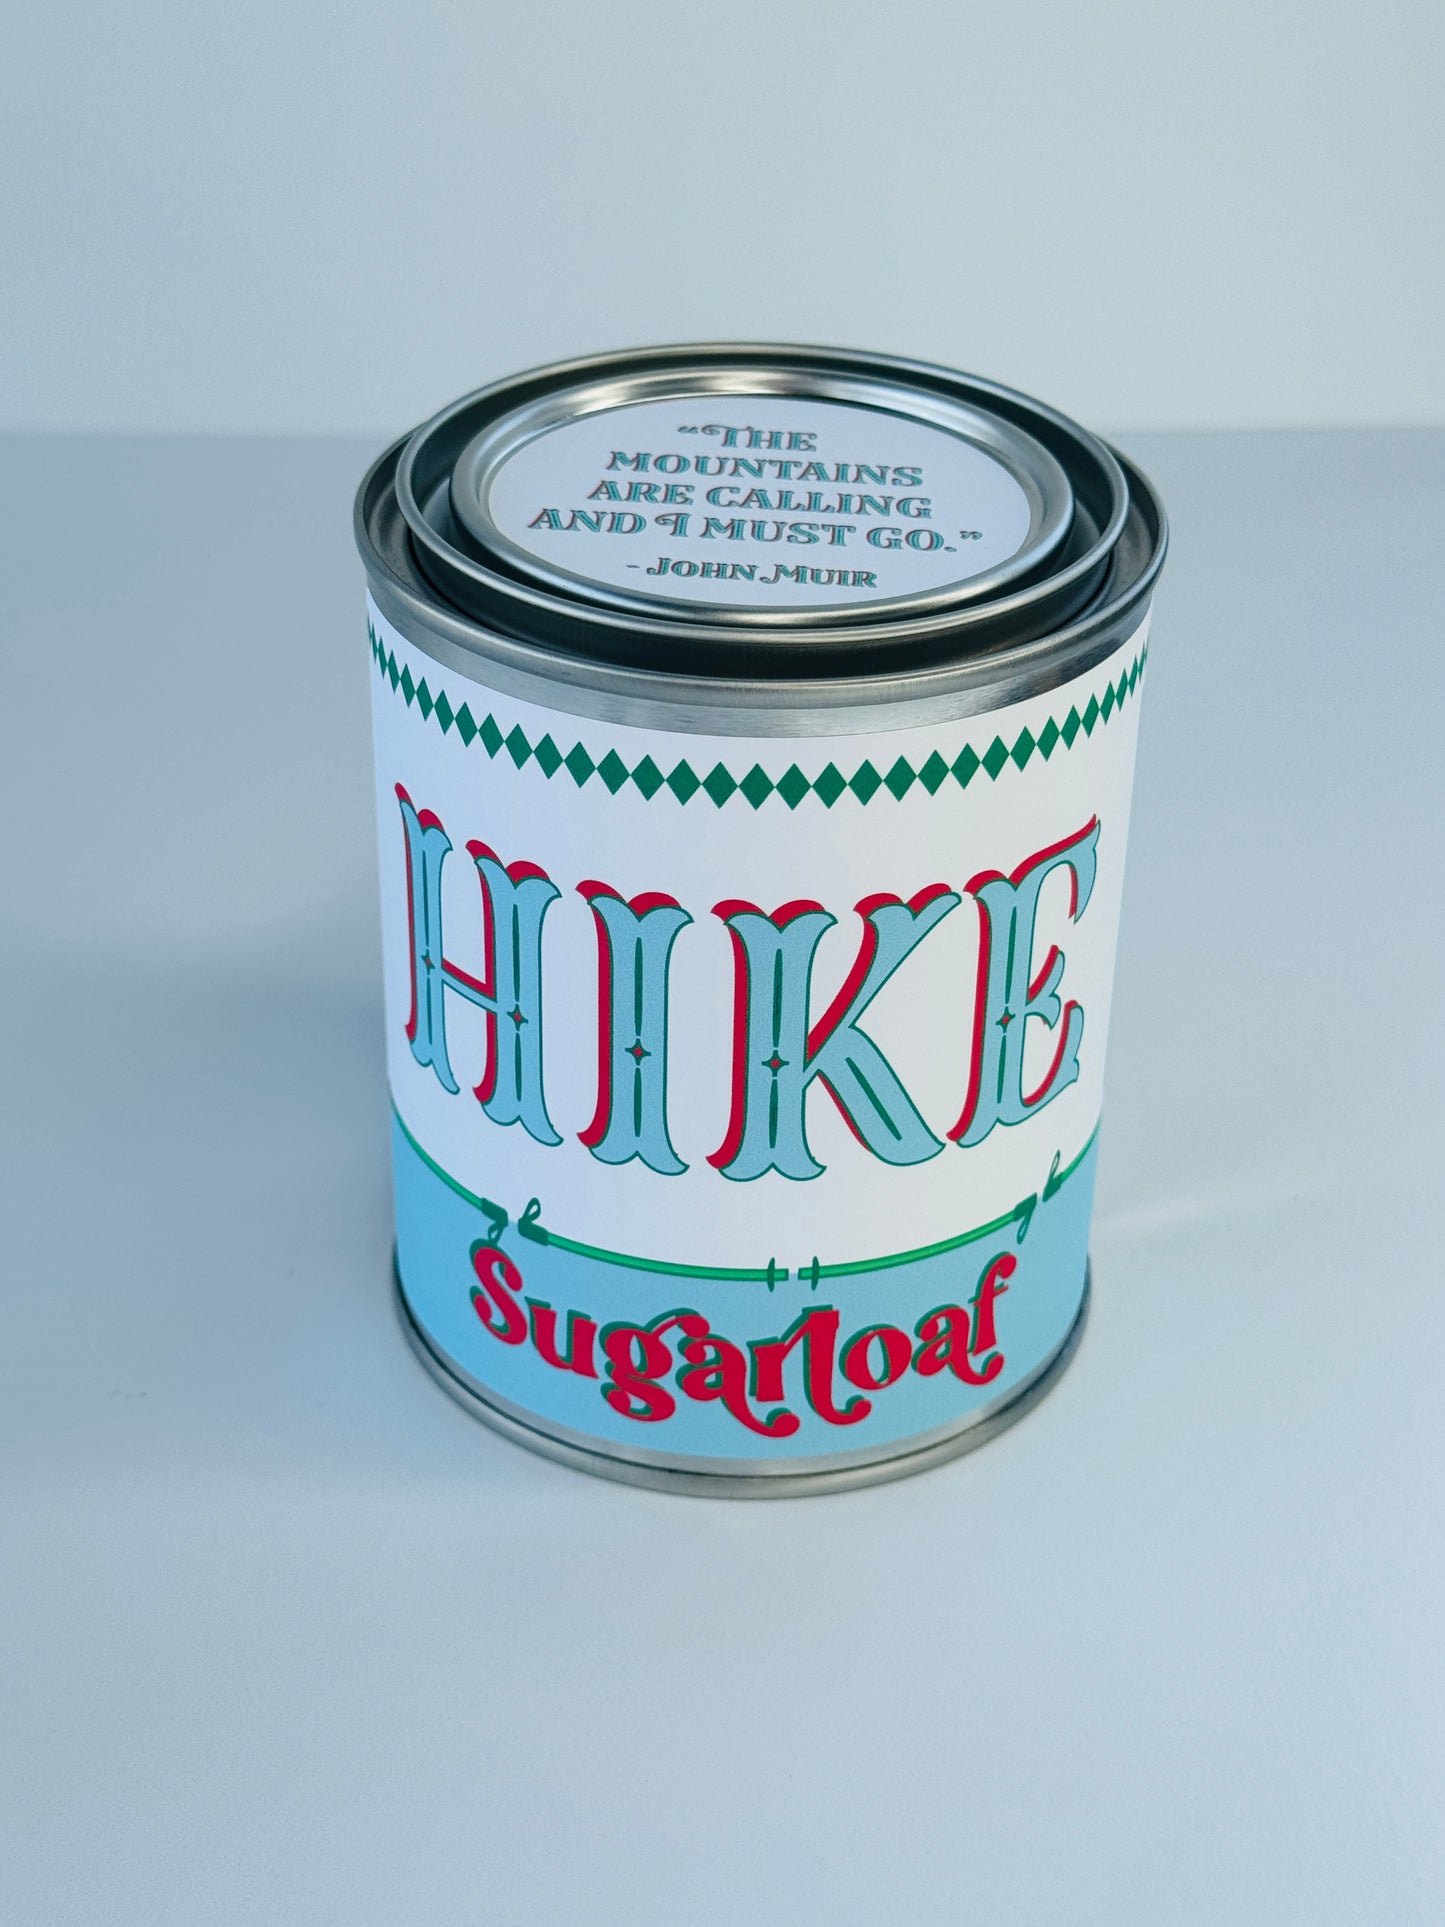 Hike Sugarbush - Paint Tin Candle